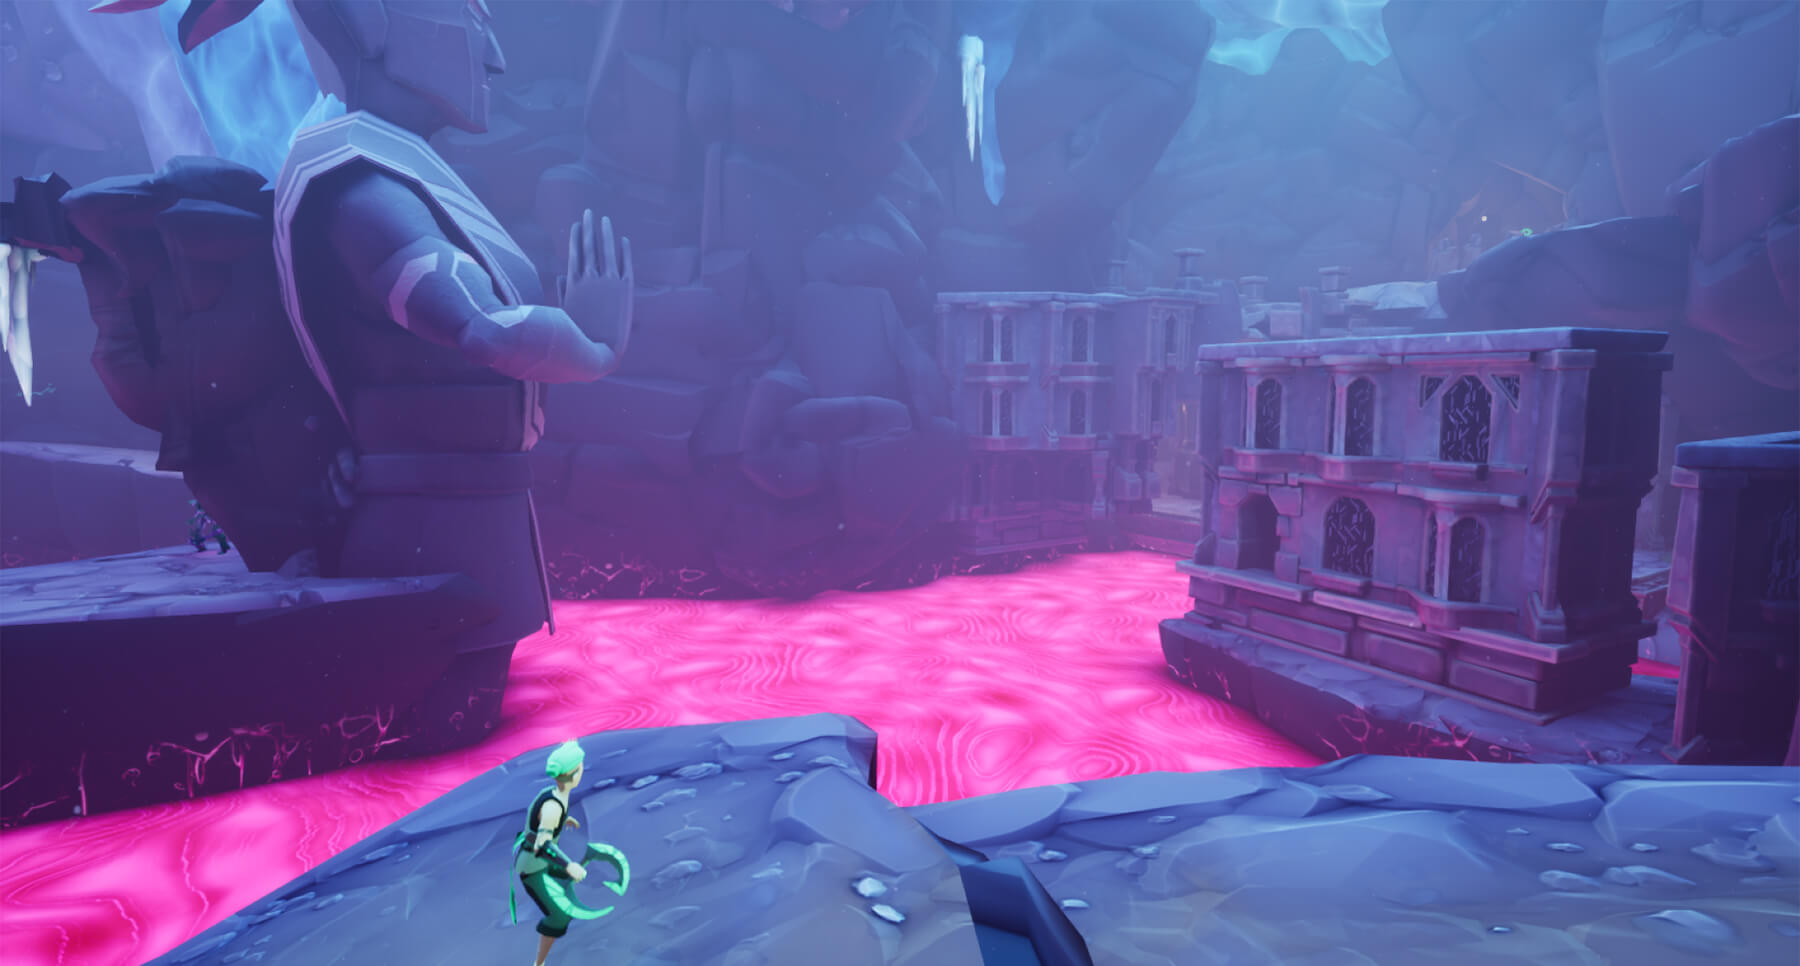 Game screenshot showing a monk protagonist standing amidst underground ruins